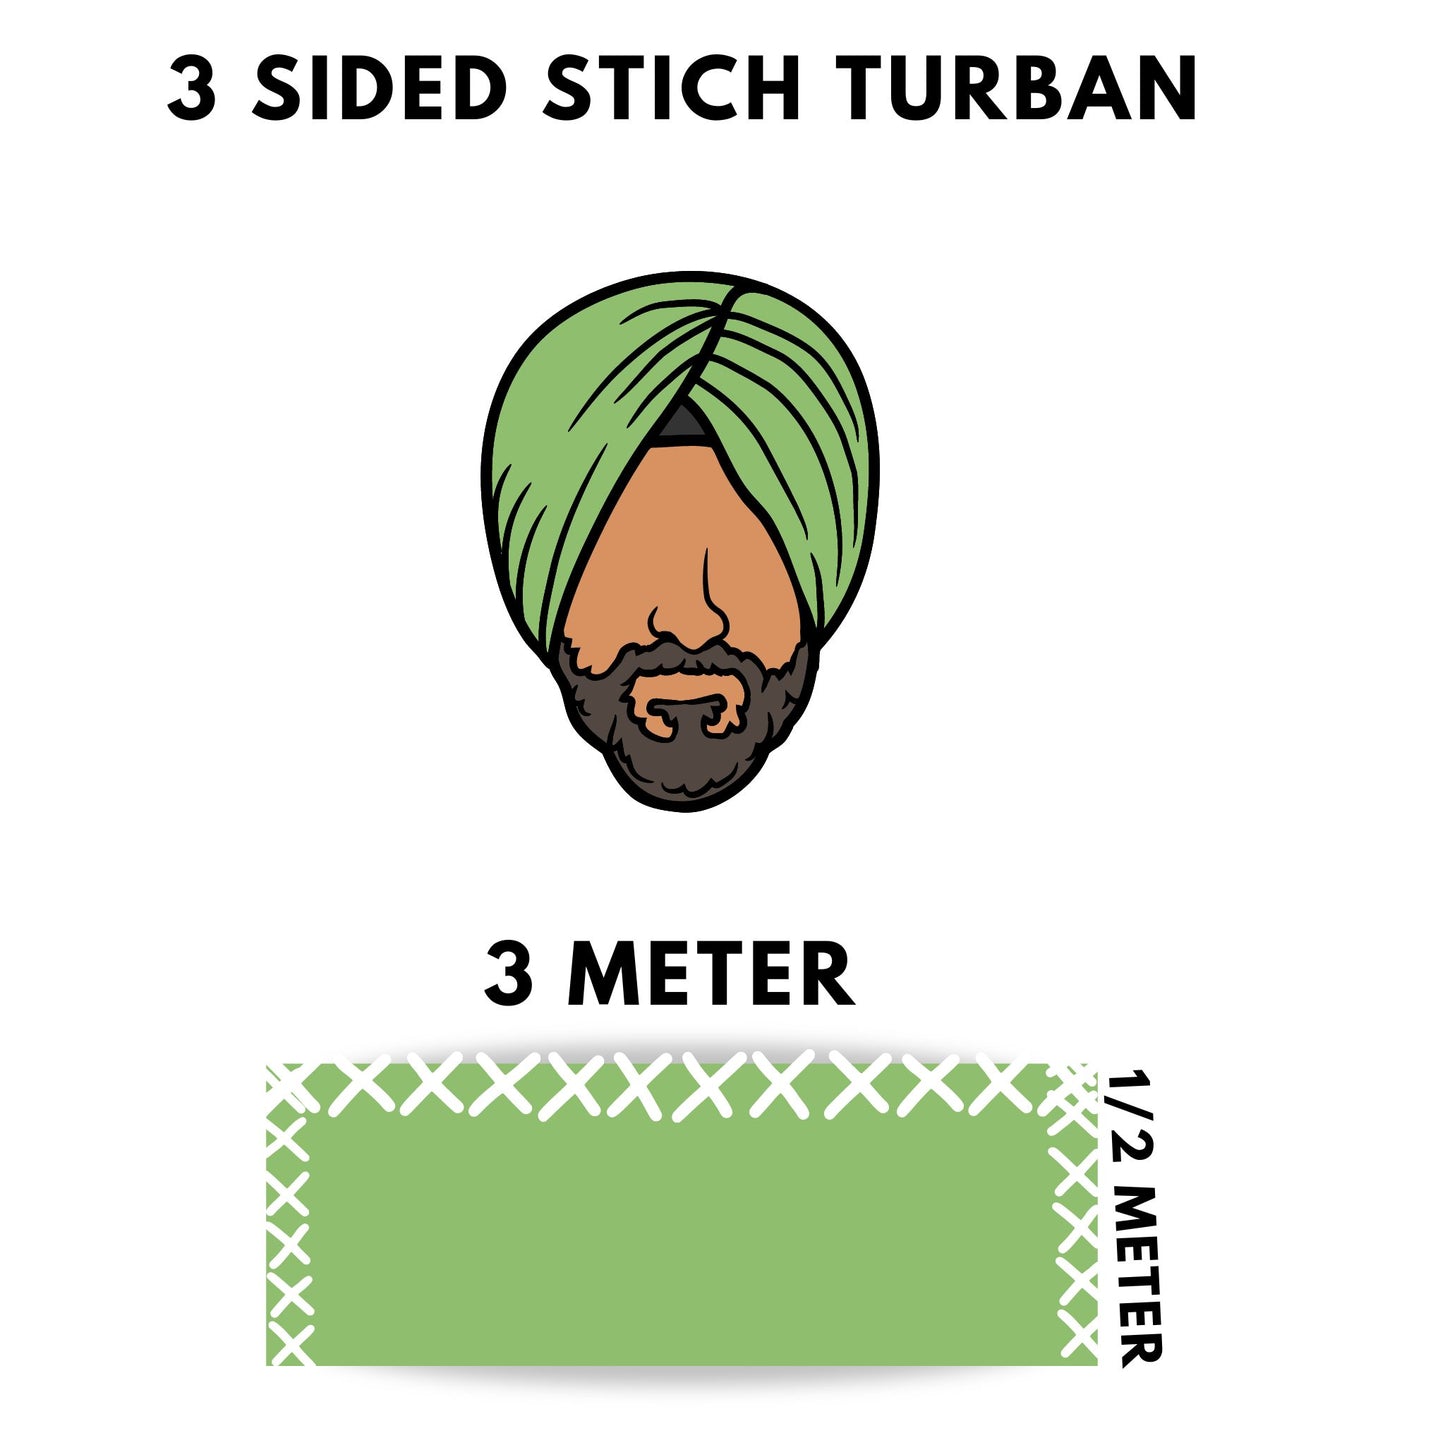 Turban 3 Meter/ 3 Sided Stich Turban